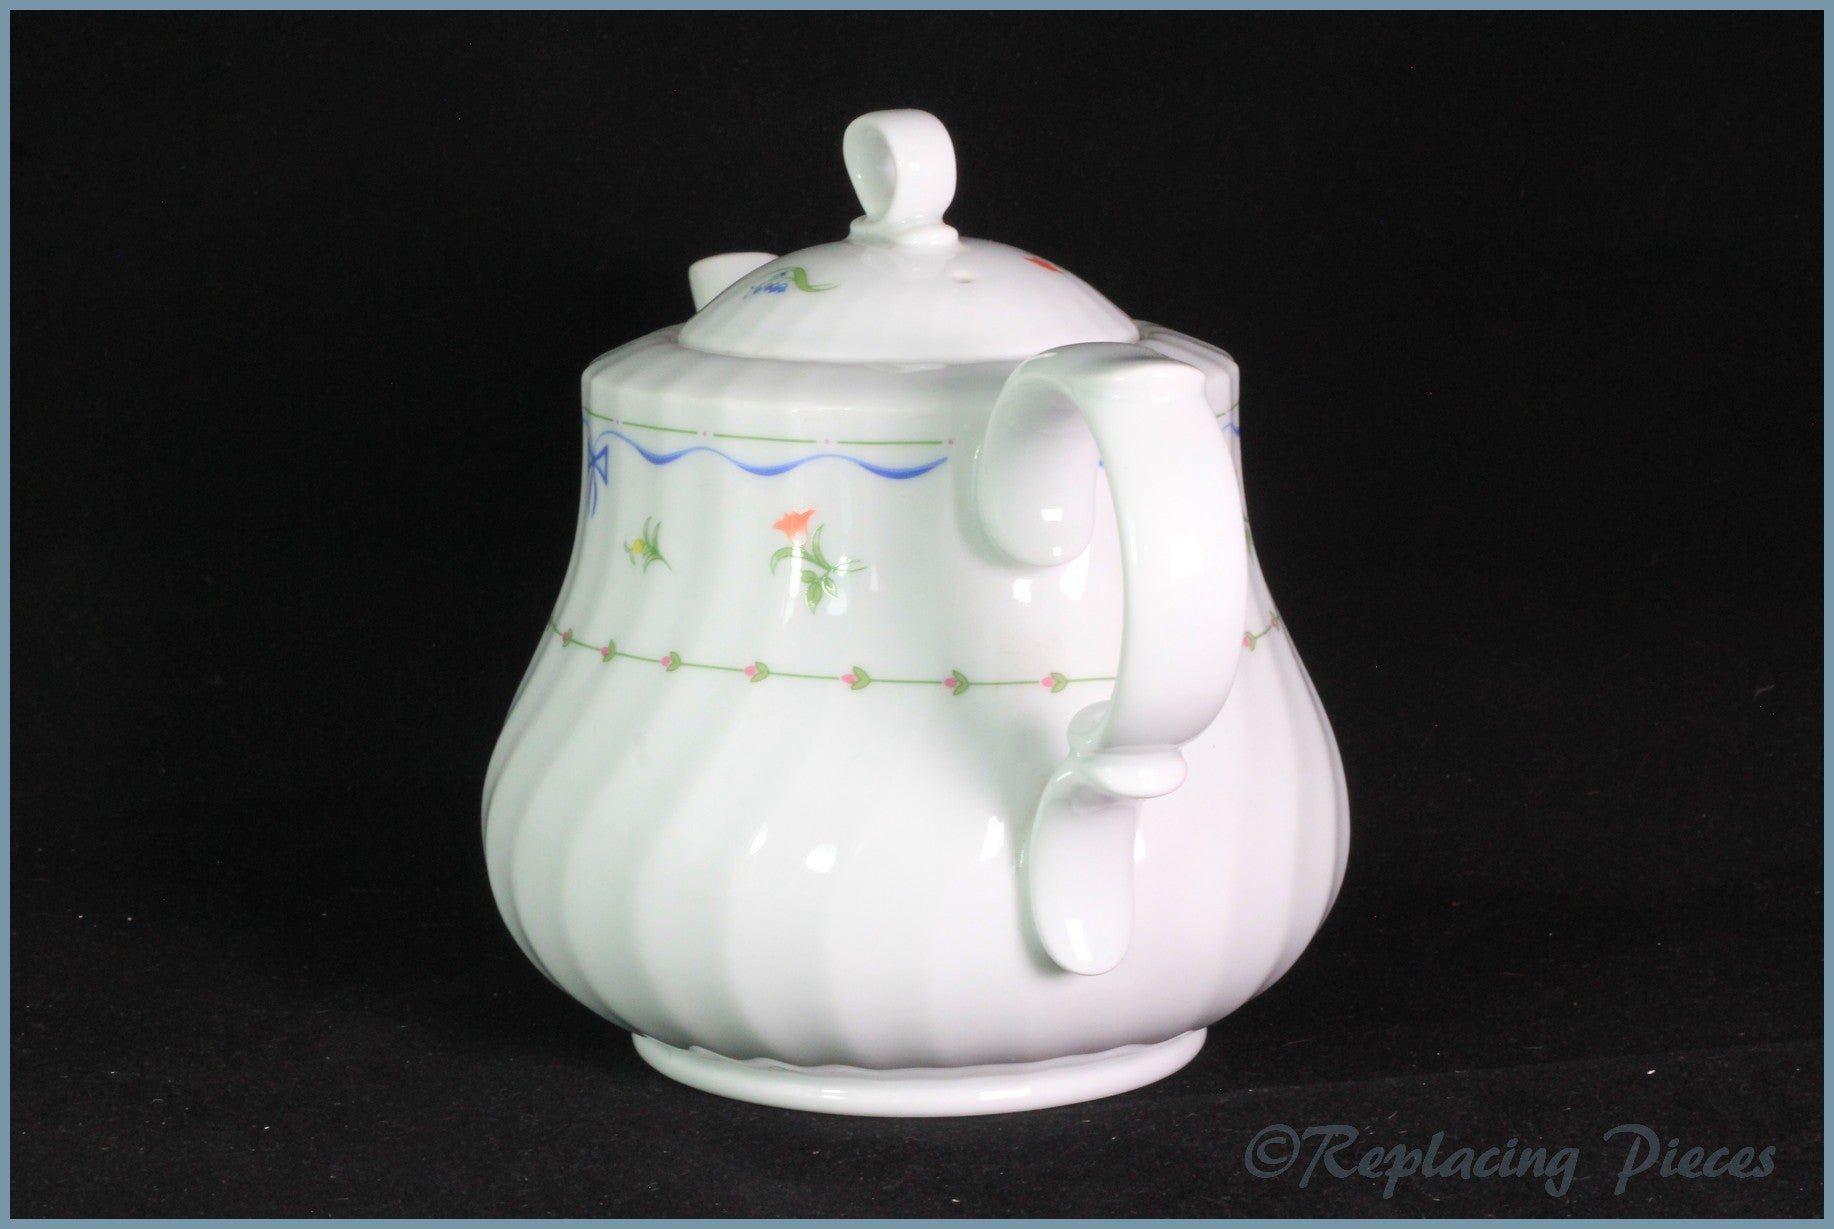 Royal Worcester - Ribbons & Bows - 2 Pint Teapot